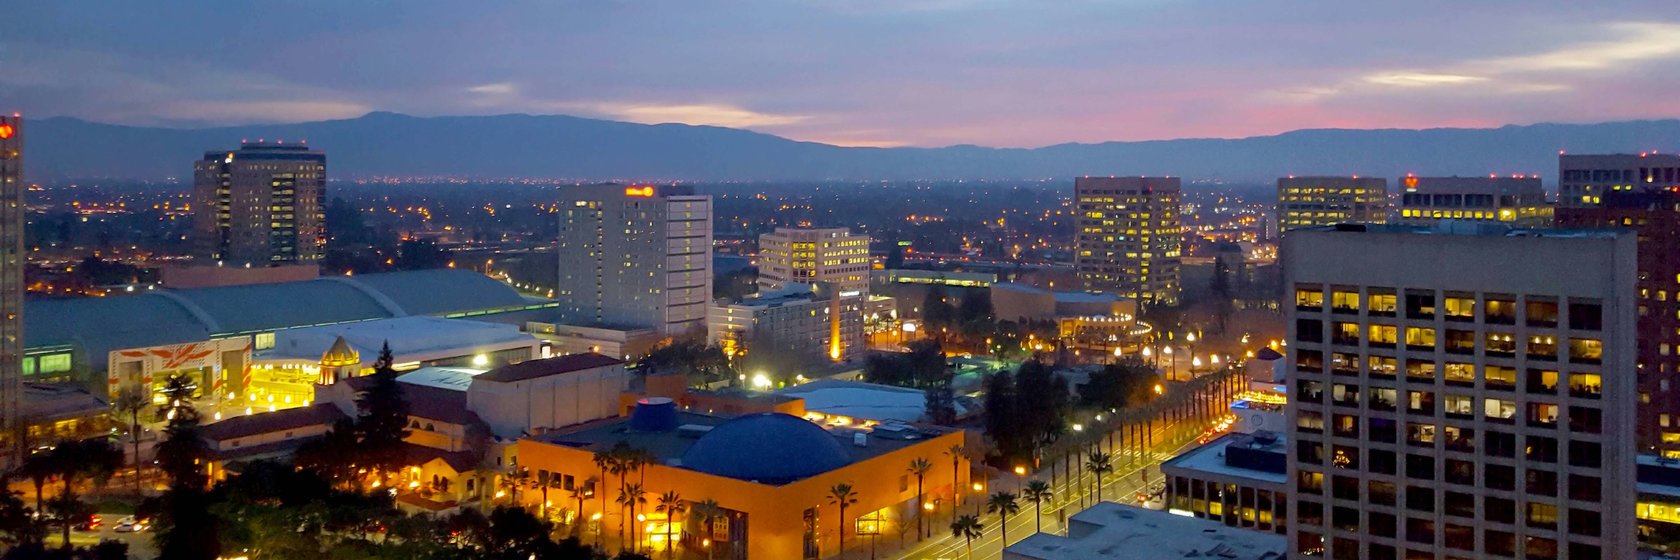 Hotely Kalifornie - San Jose